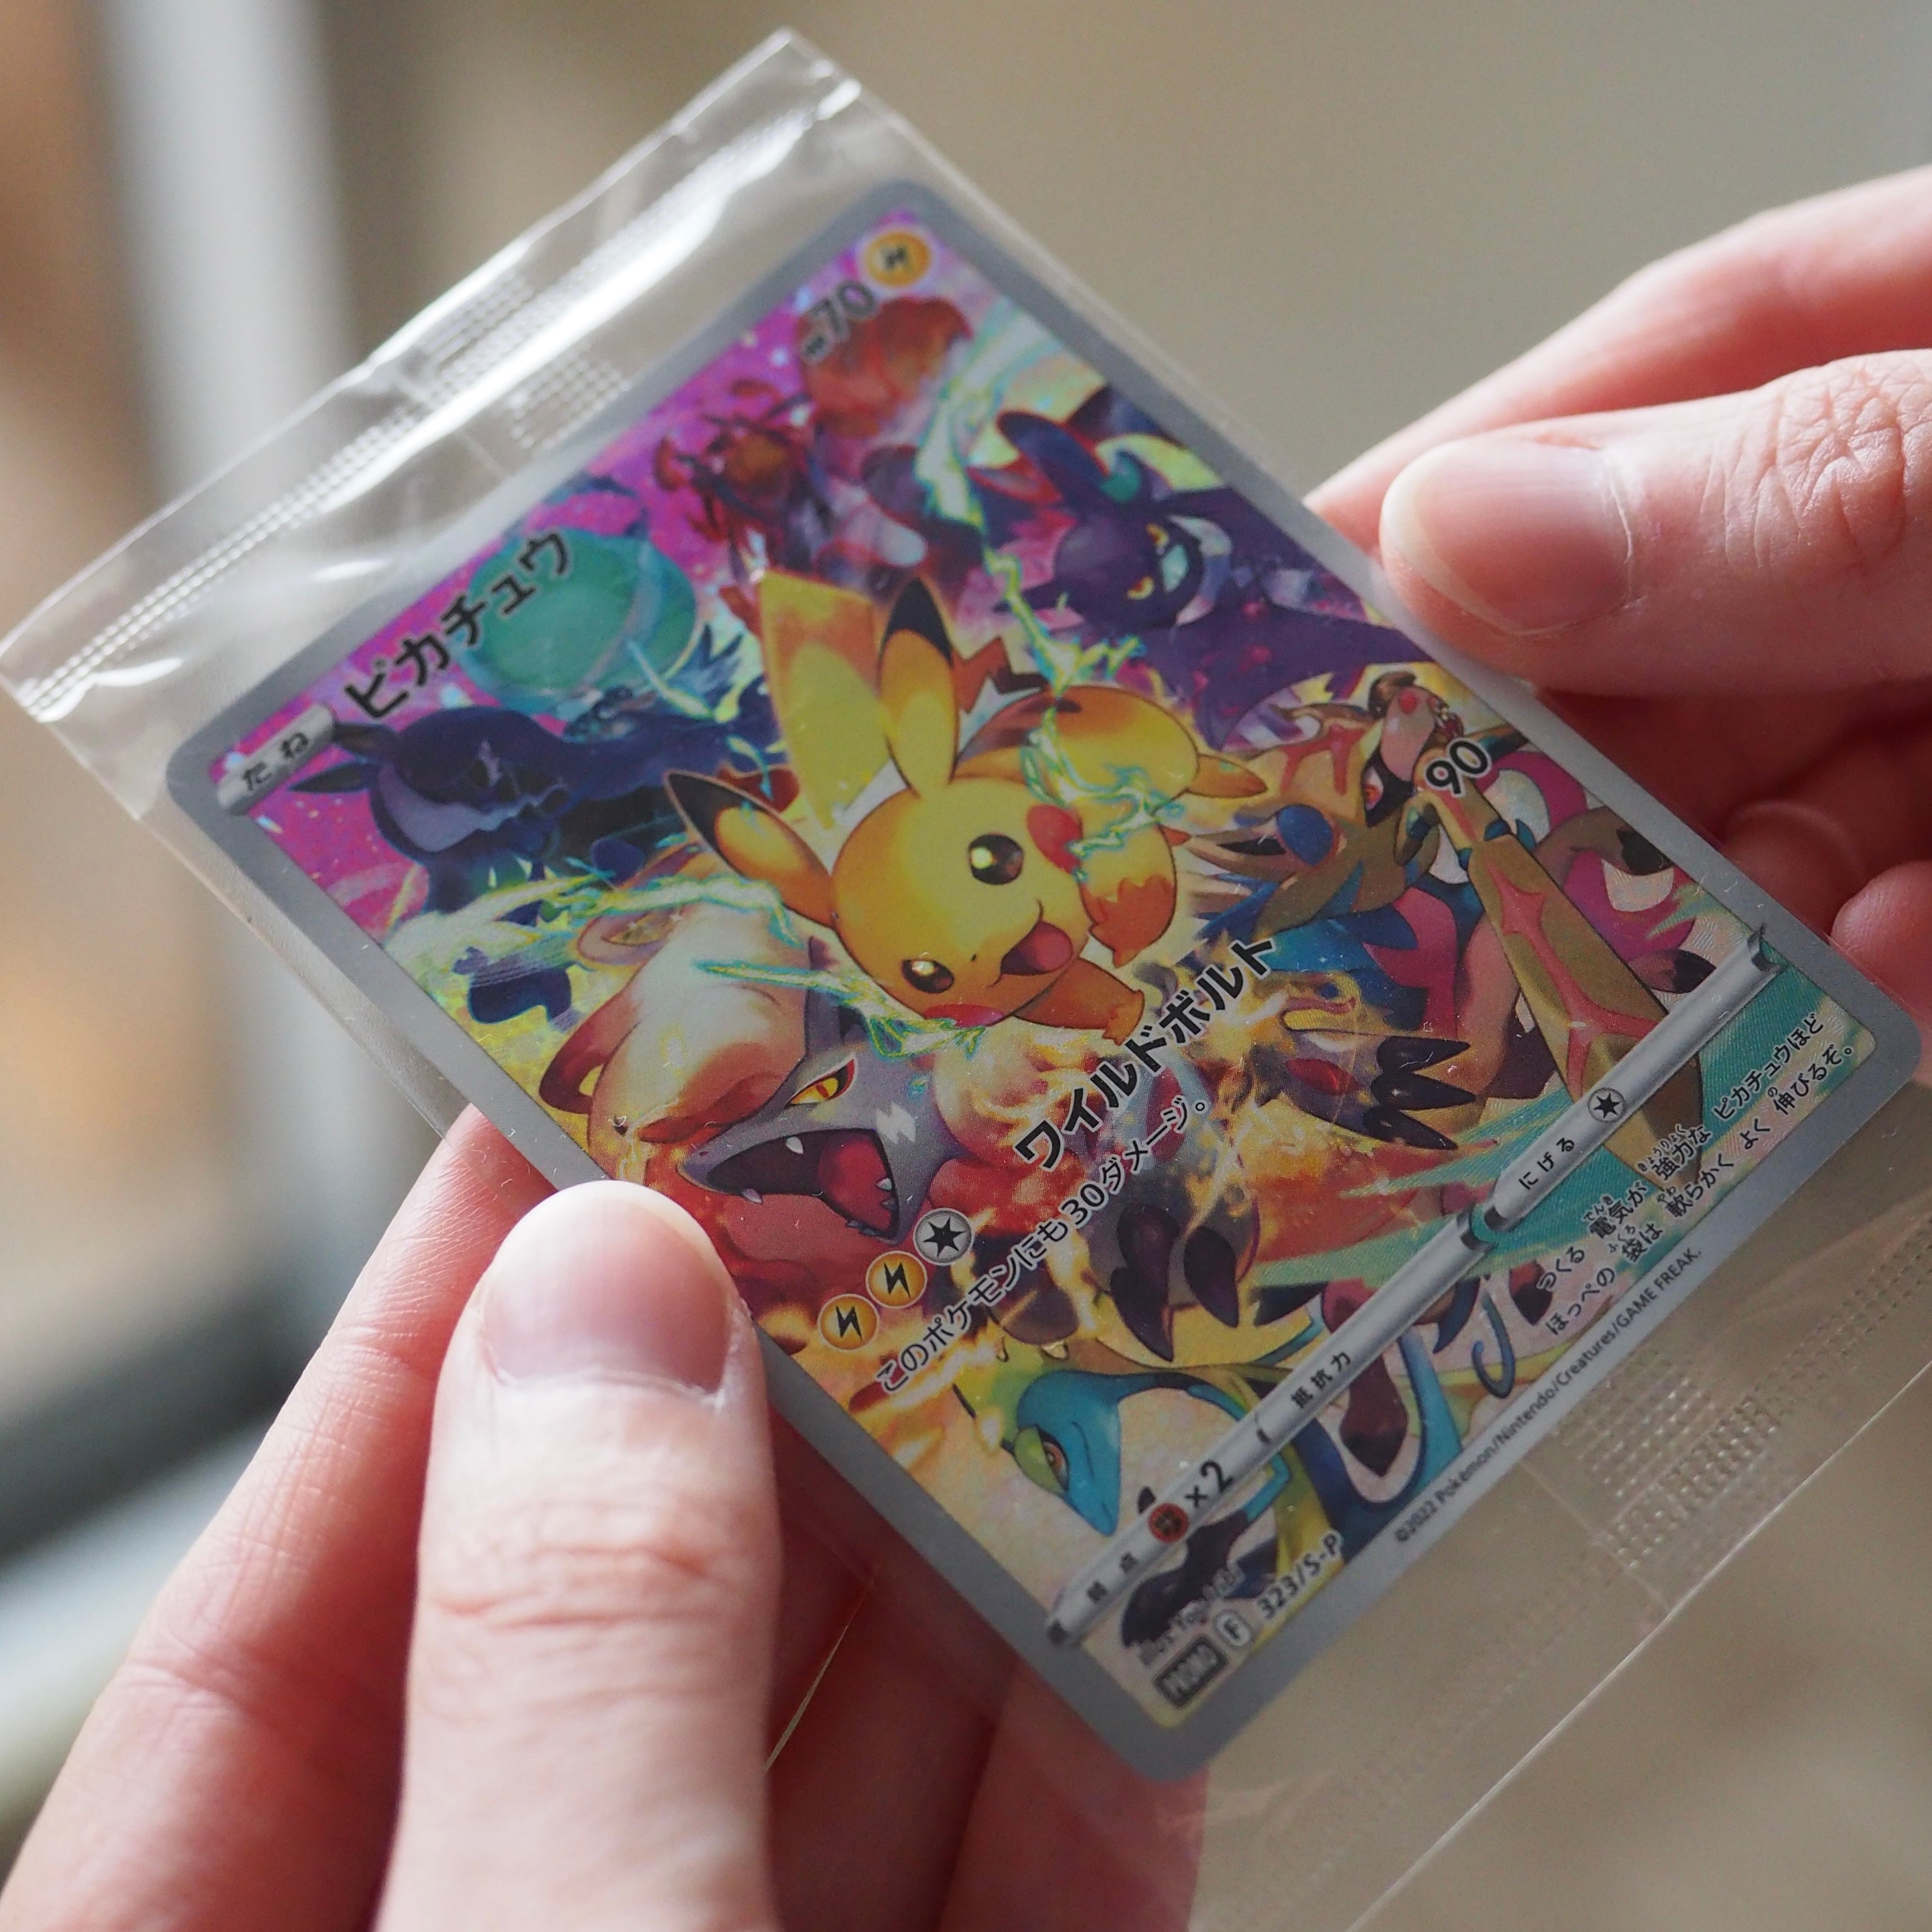 Pokémon Card Game PROMO 323/S-P in blister